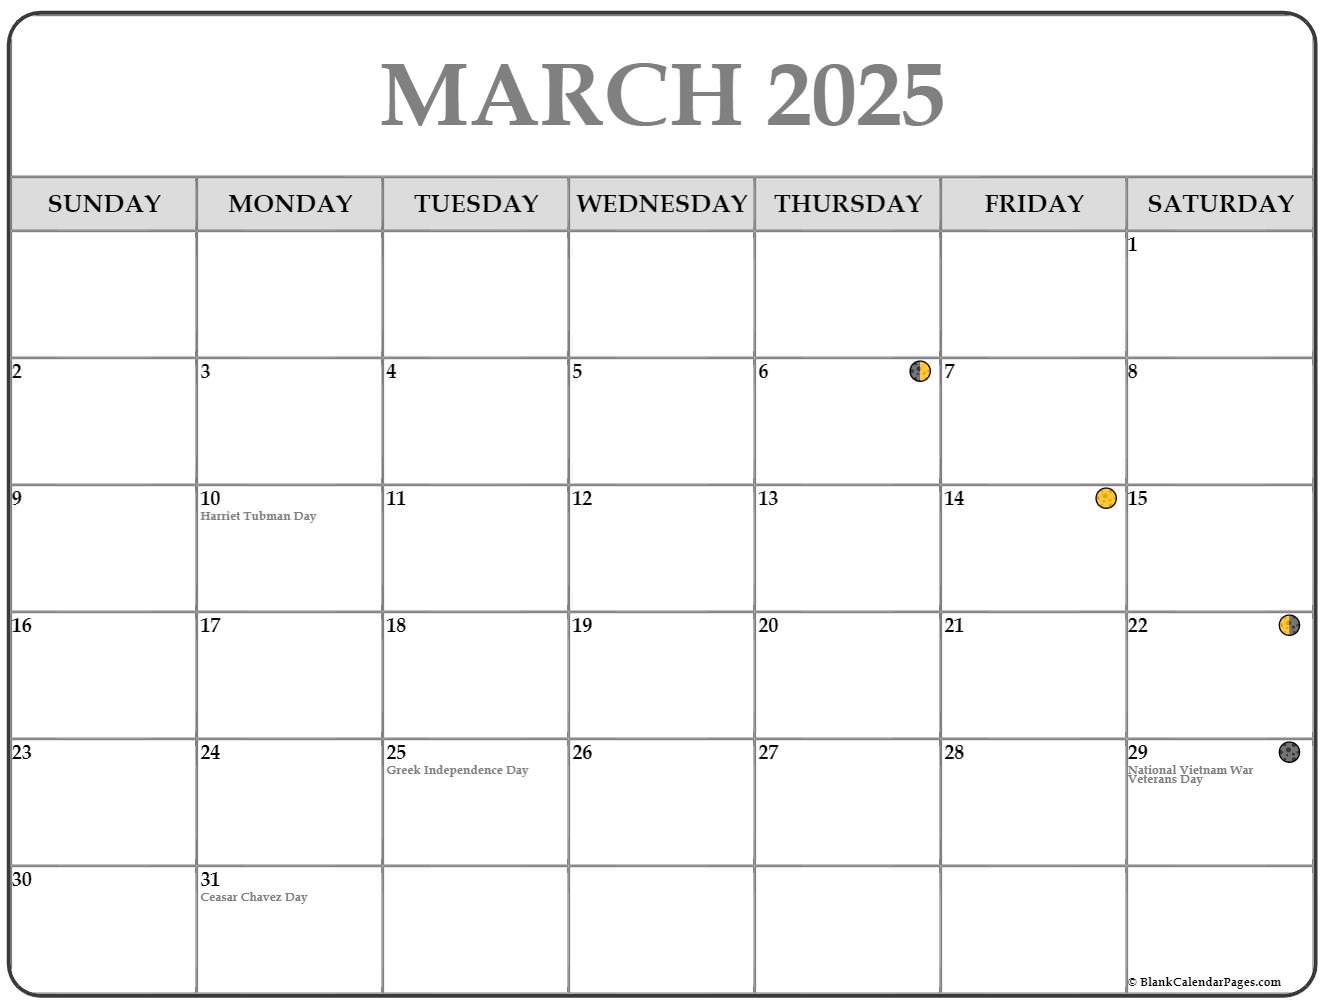 March 2025 Lunar Calendar Moon Phase Calendar